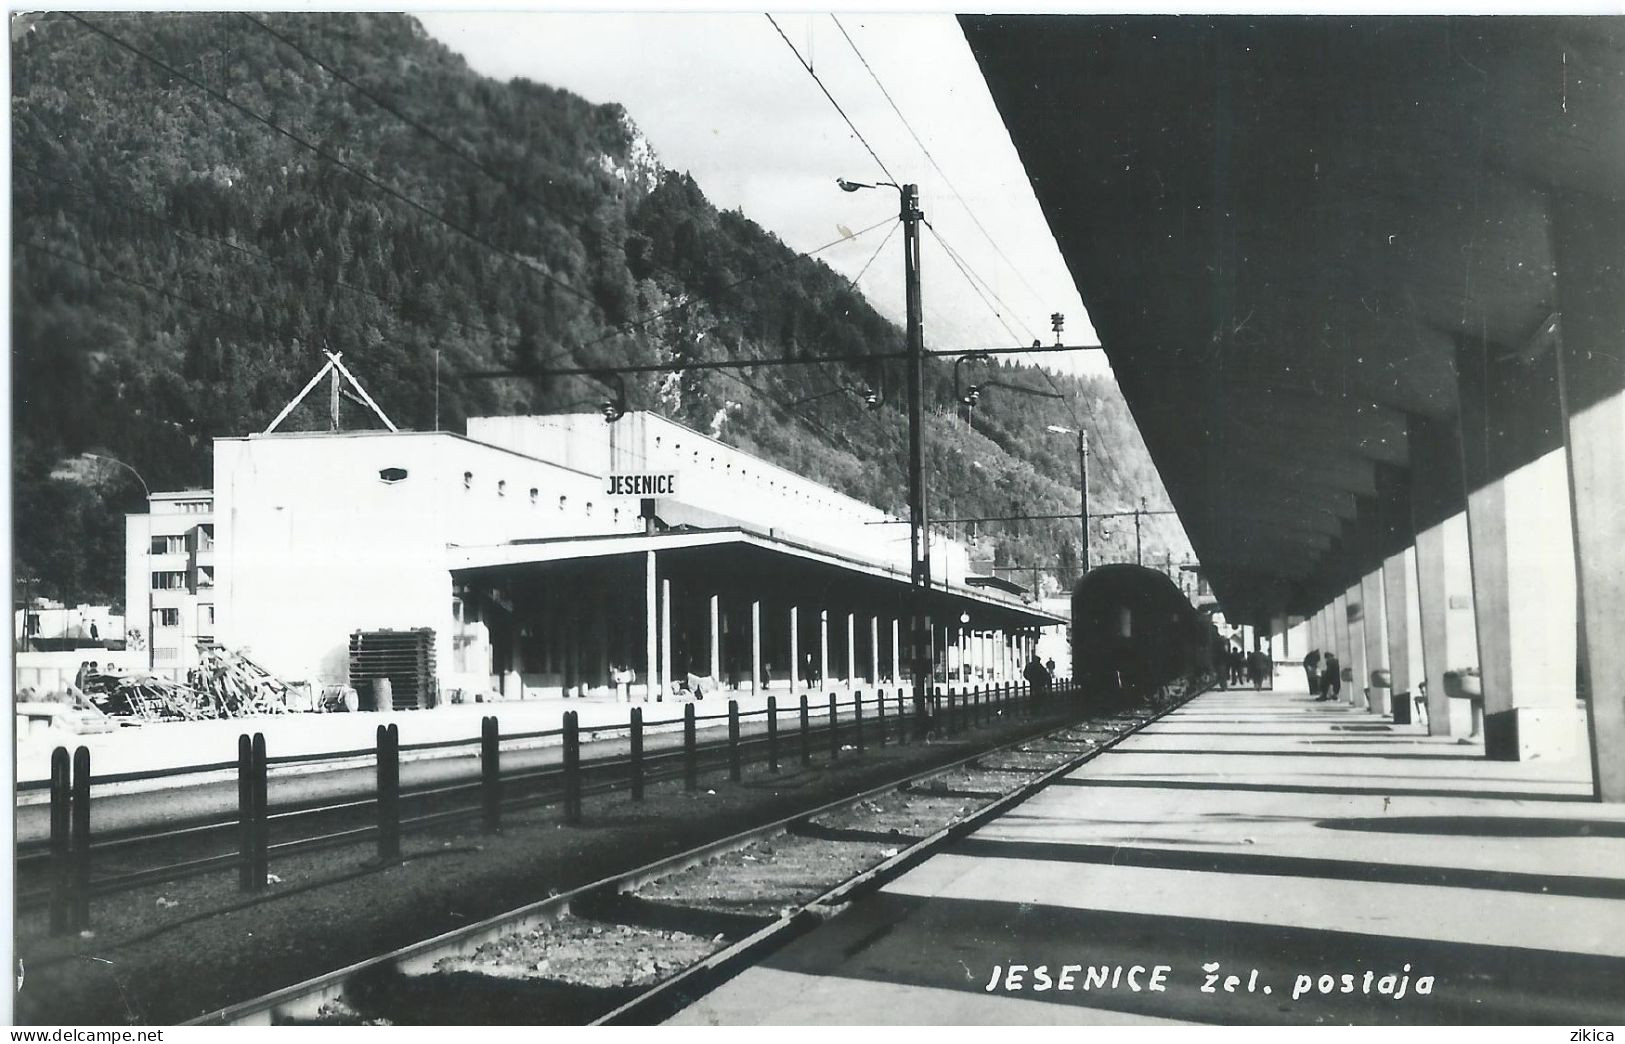 744_001 Slovenia - Jesenice. Railway station.jpg